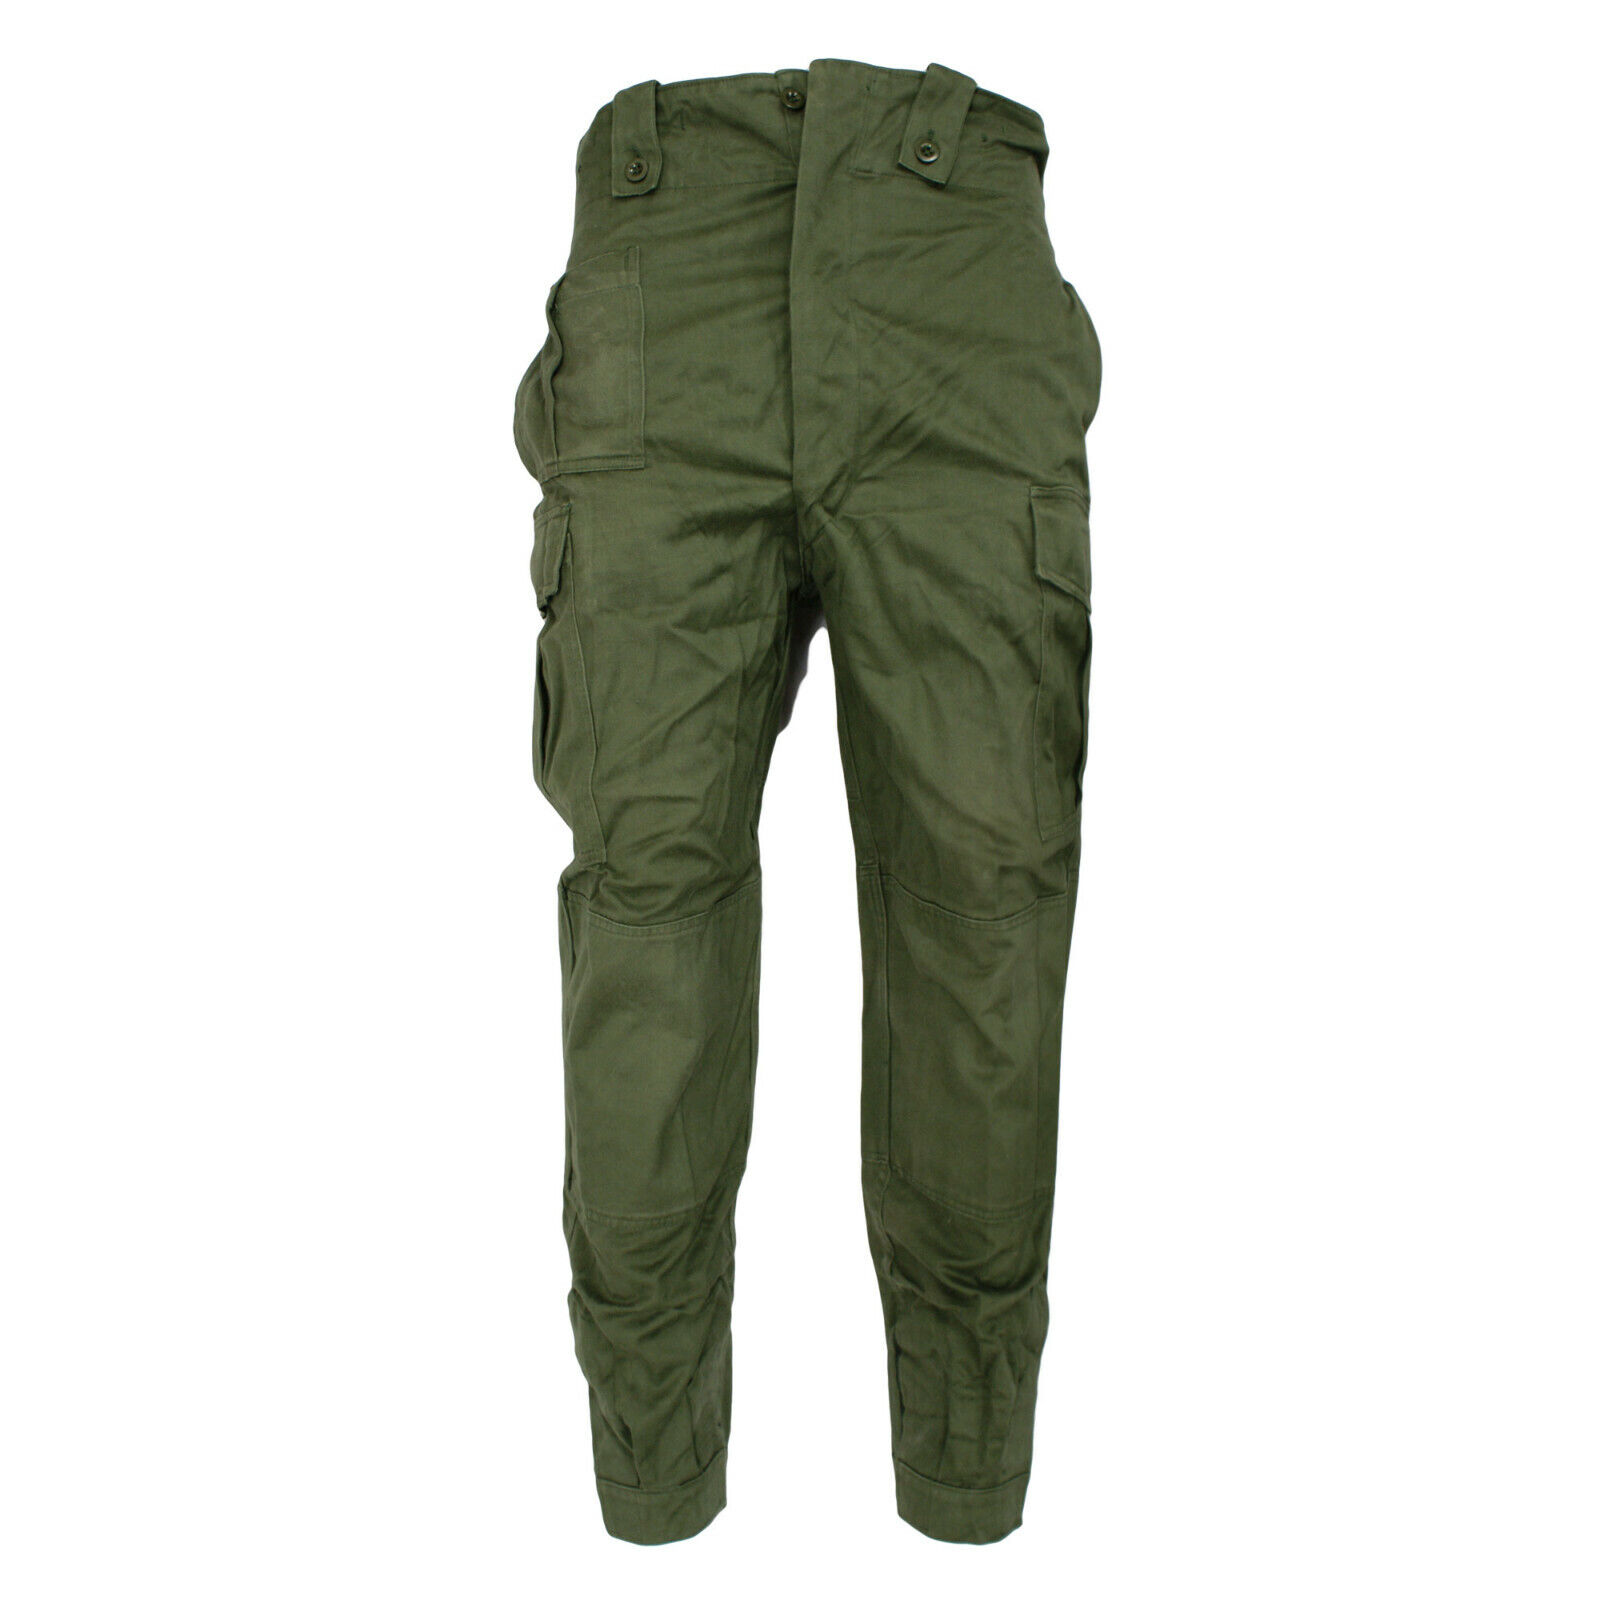 Army Trouser Original Belgian Military Belgium Combat Tactical Work Cargo Pant